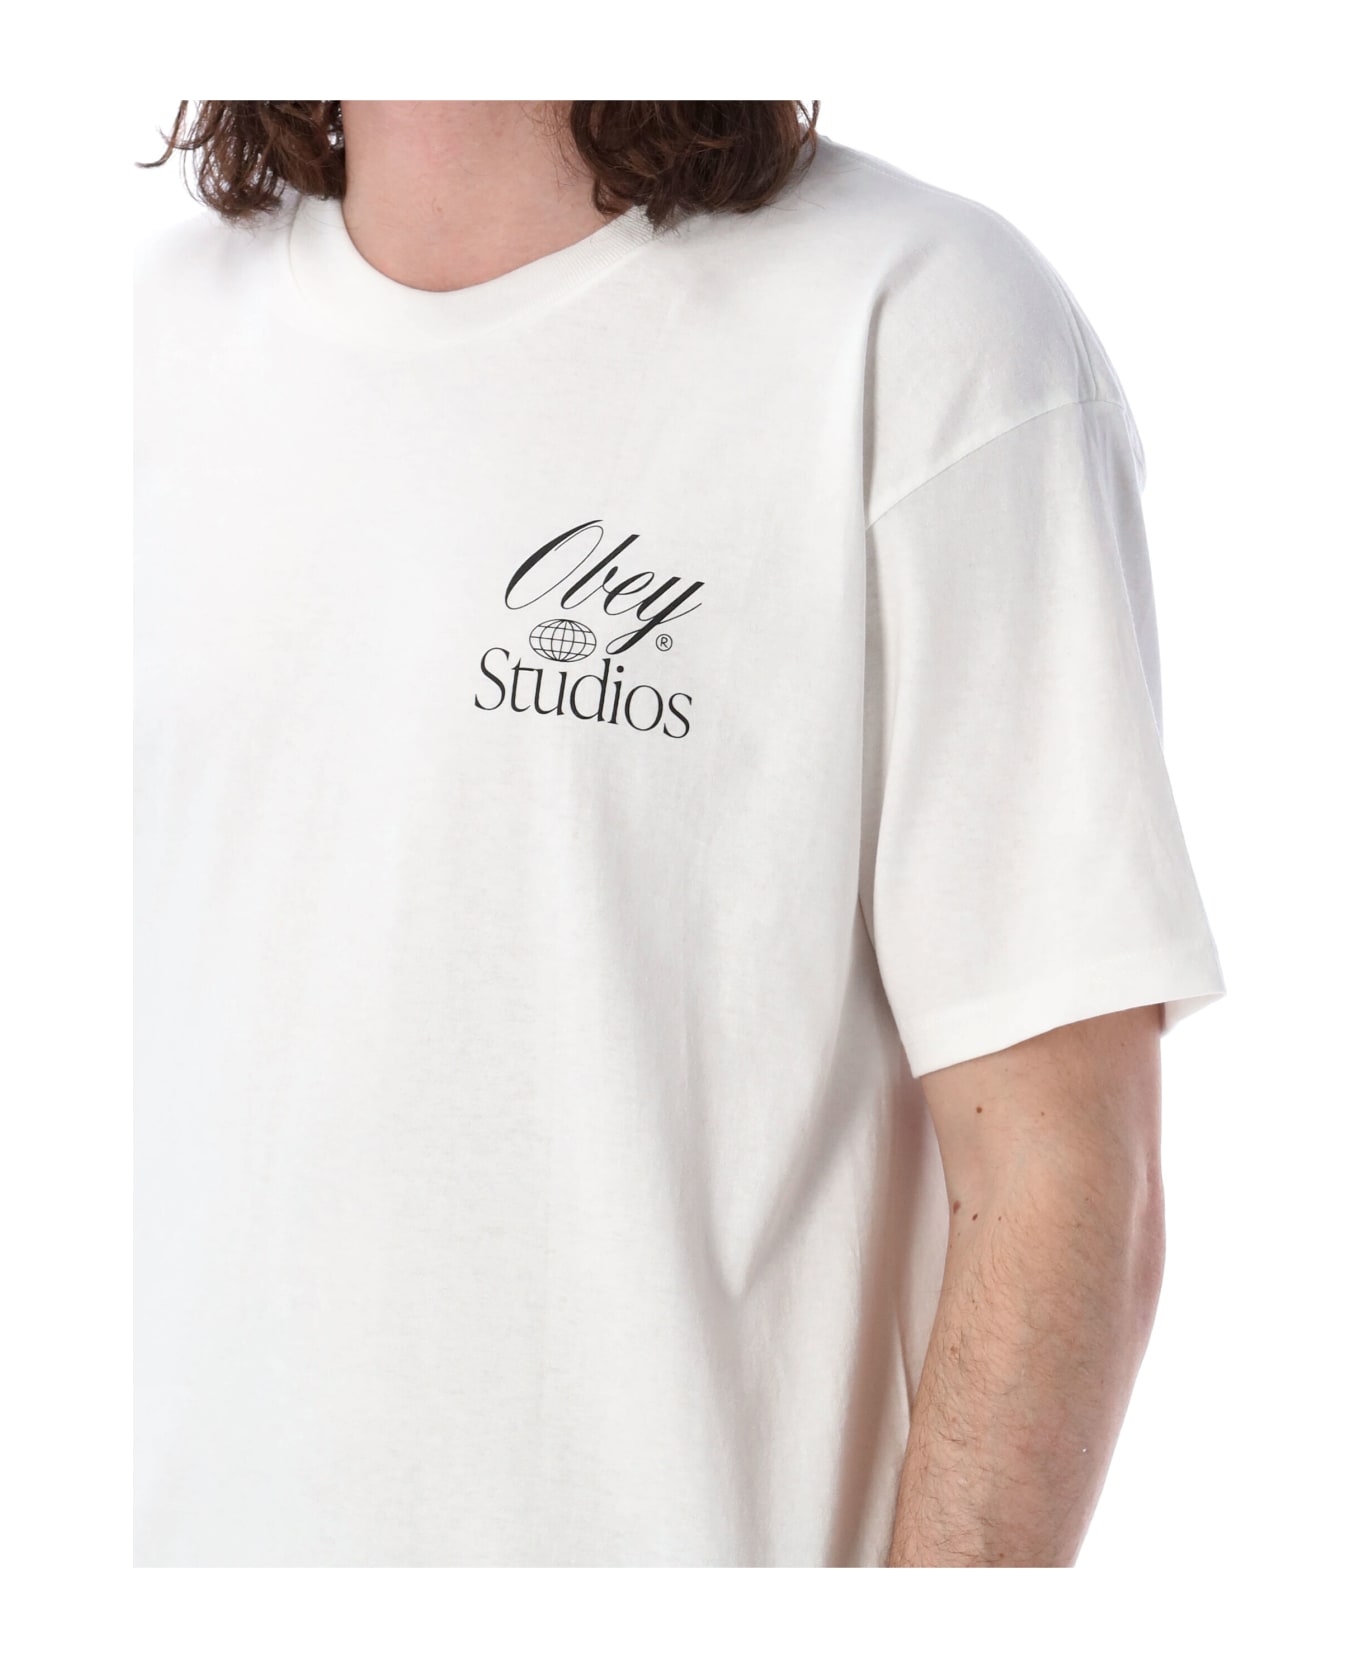 Obey Studios Worldwide T-shirt - WHITE